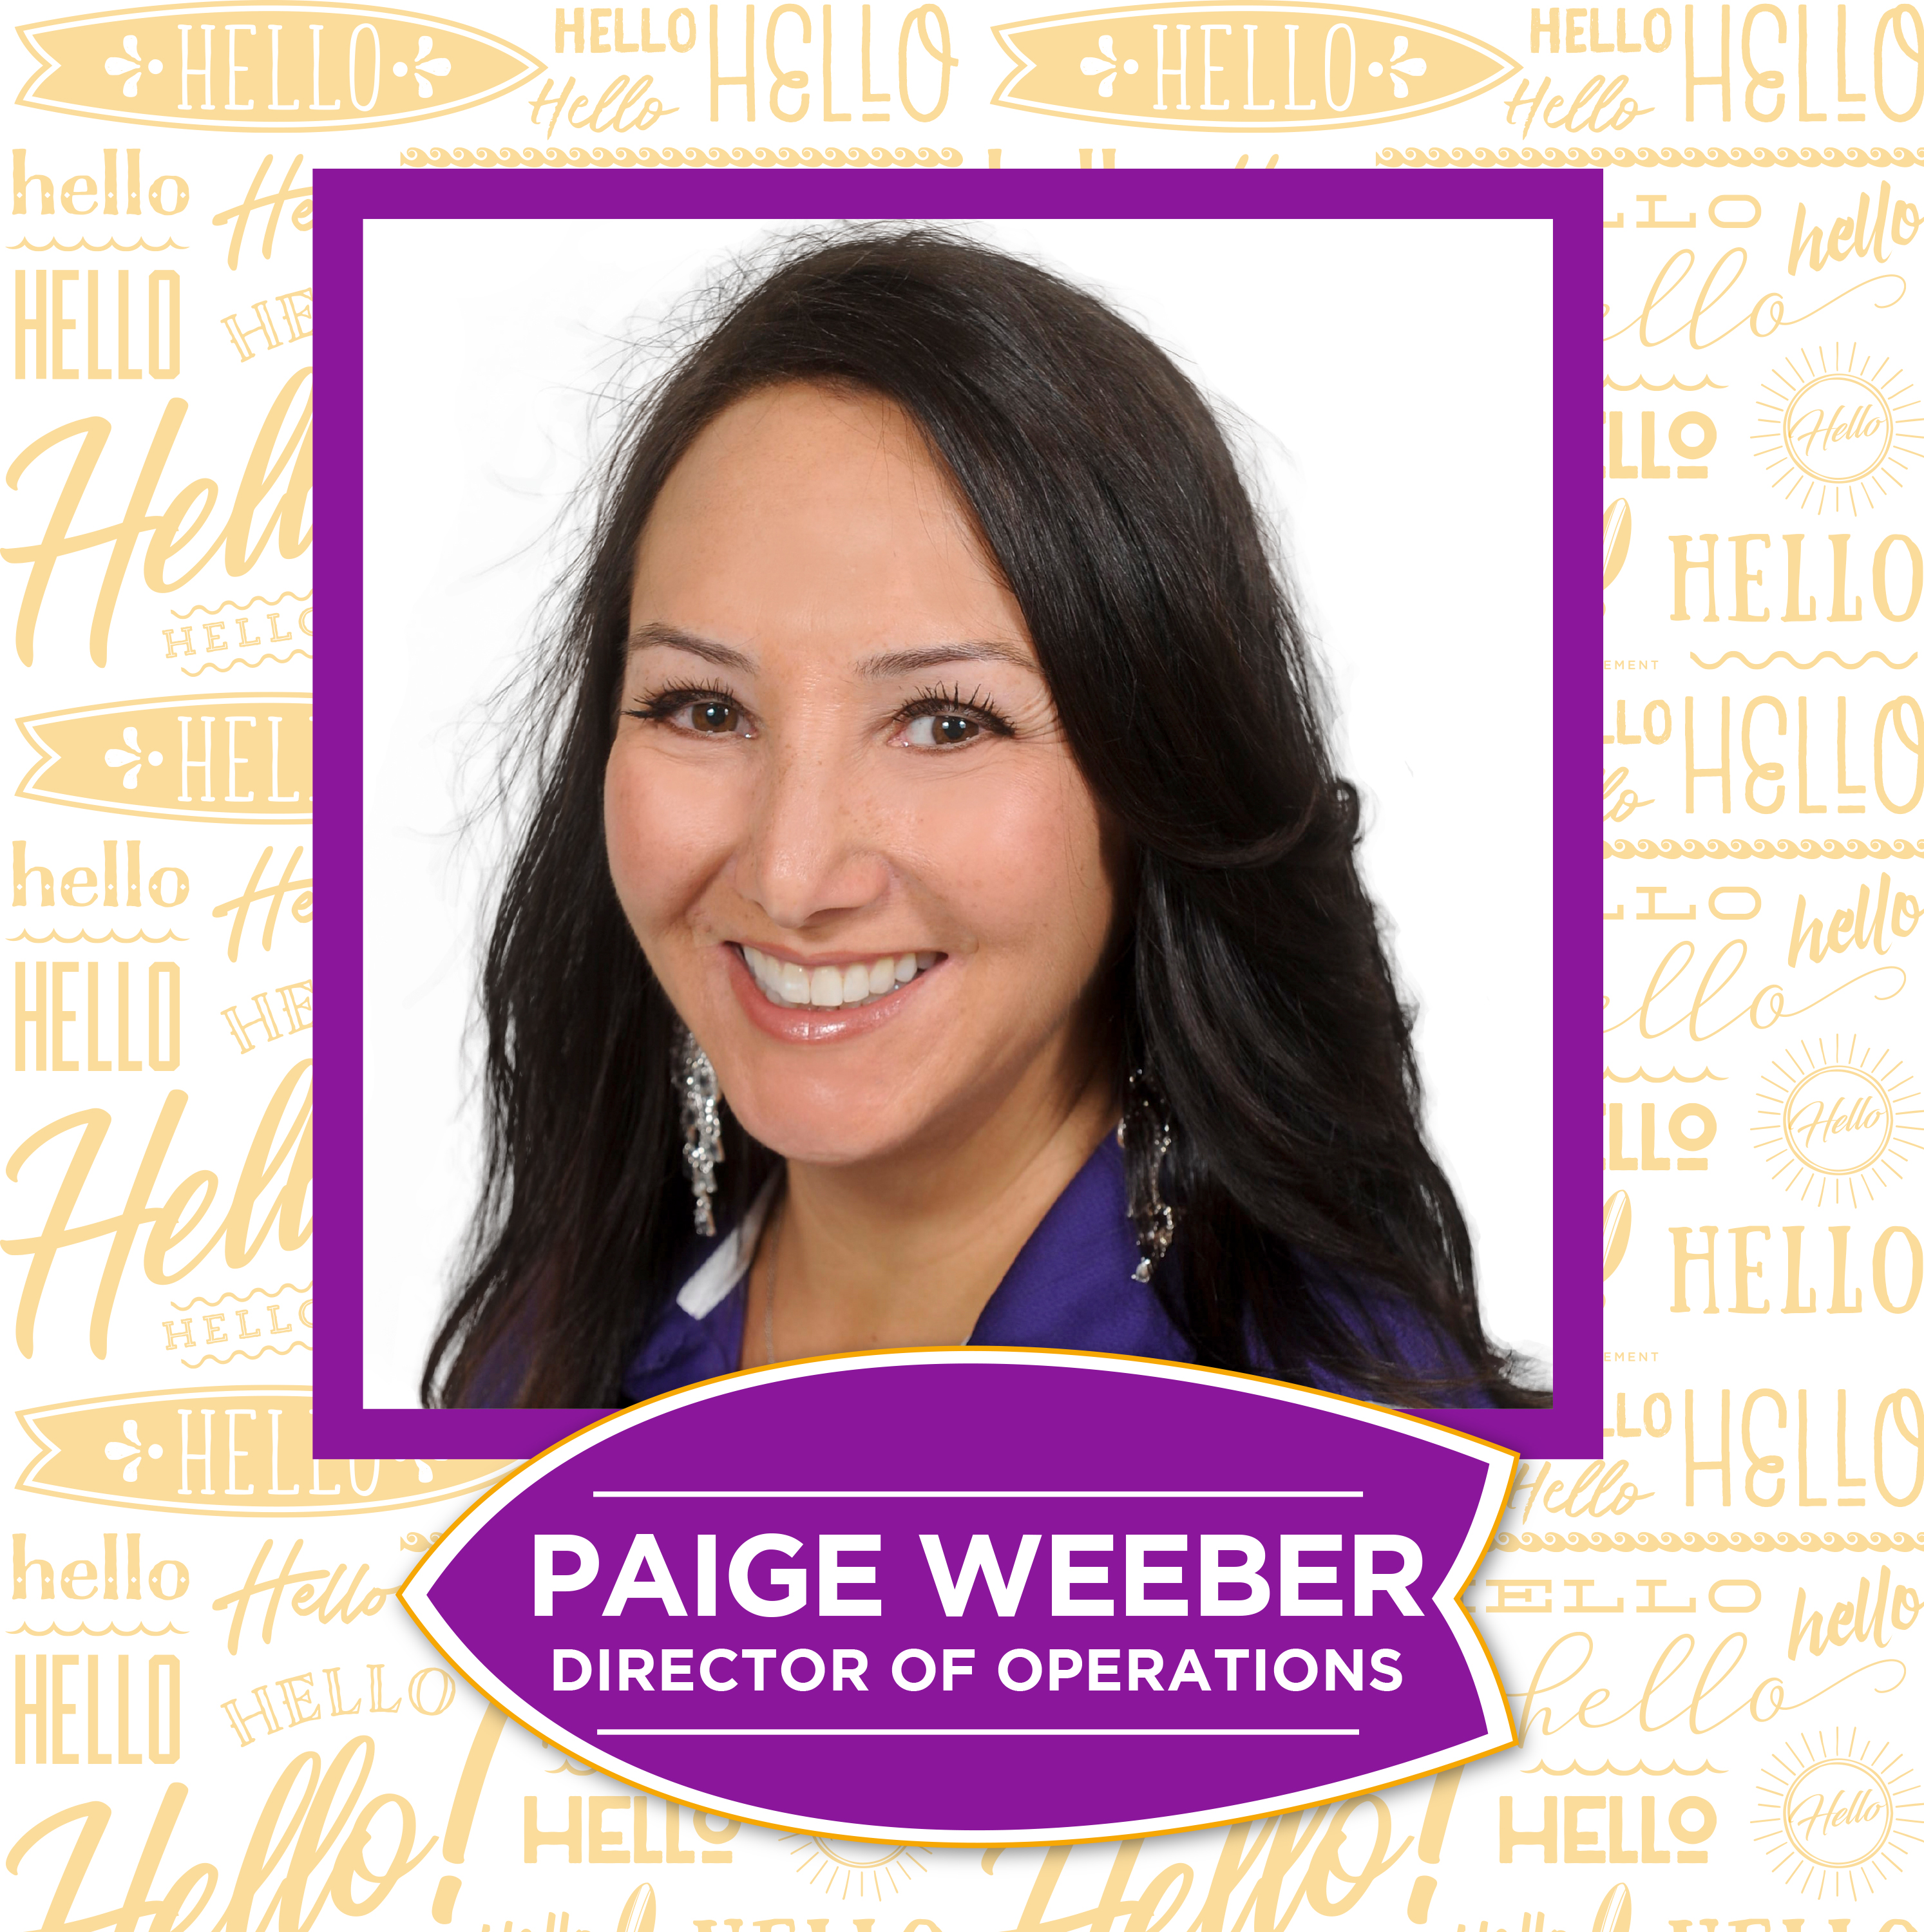 Paige Weeber